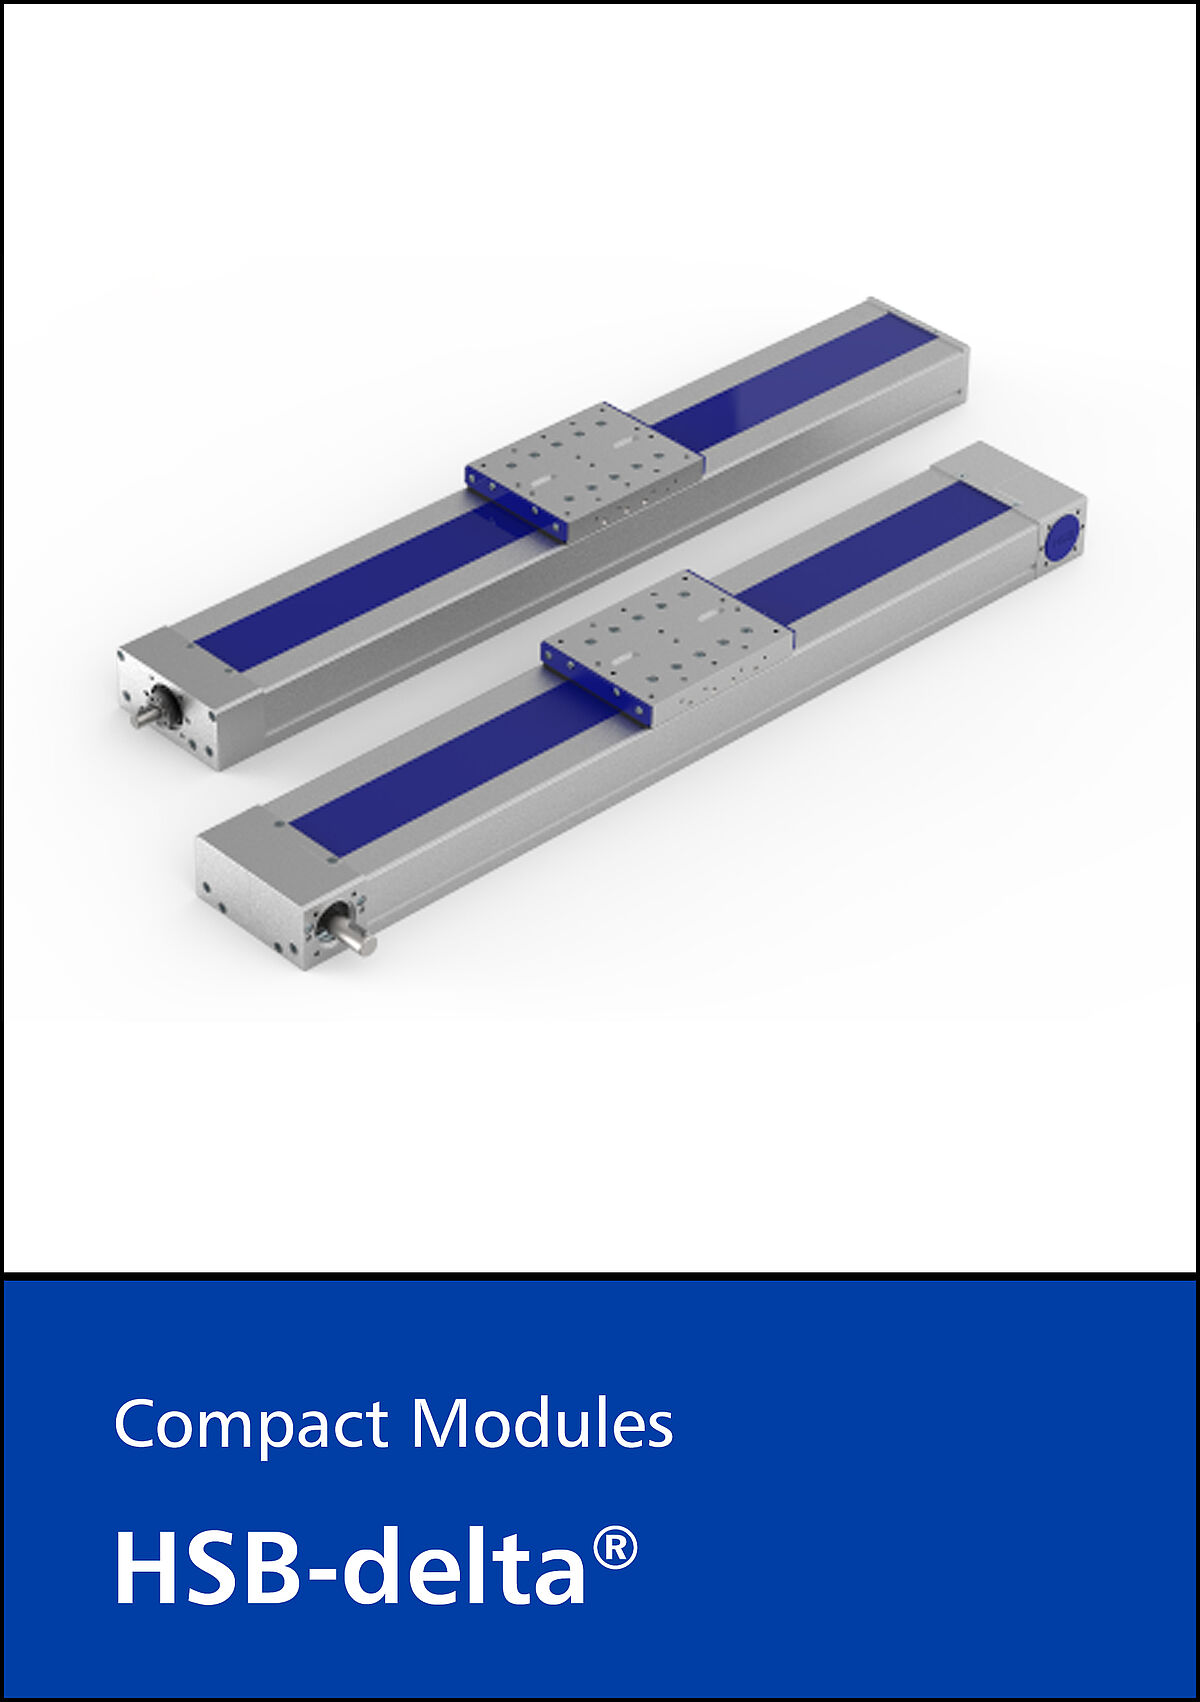 Compact modules HSB-delta®